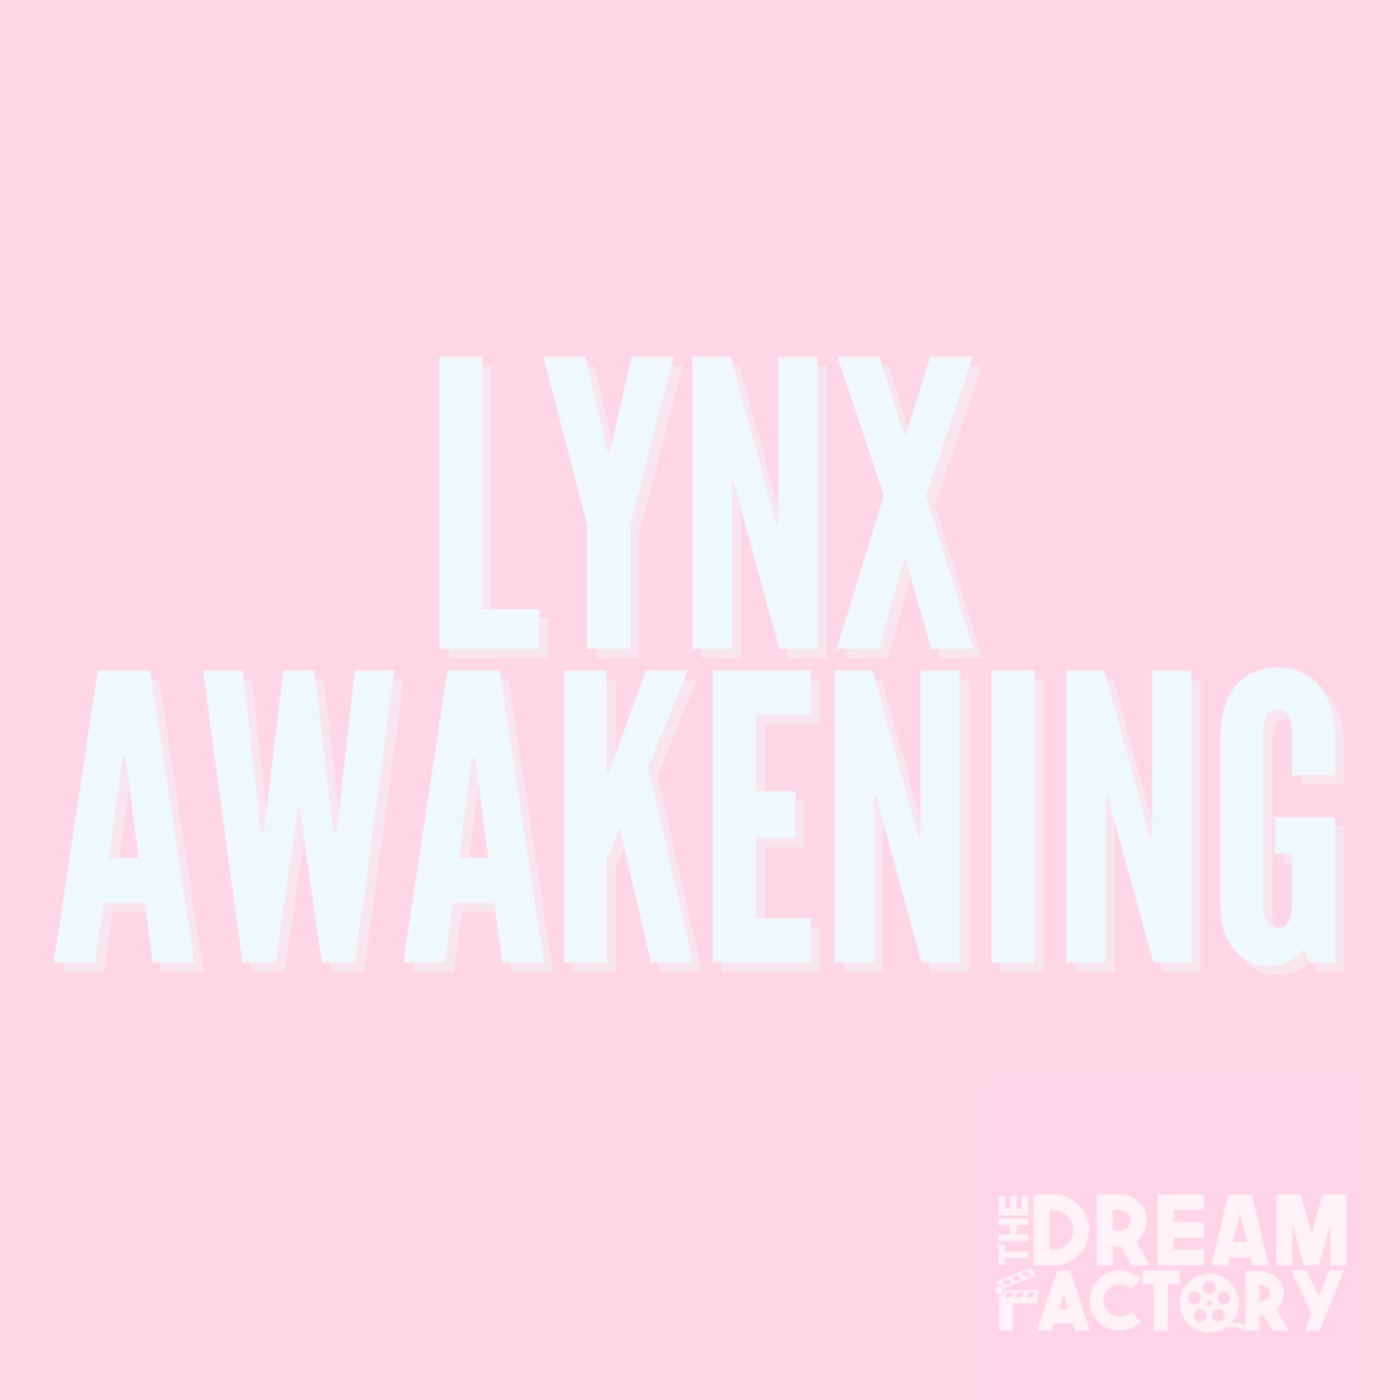 Lynx Awakening